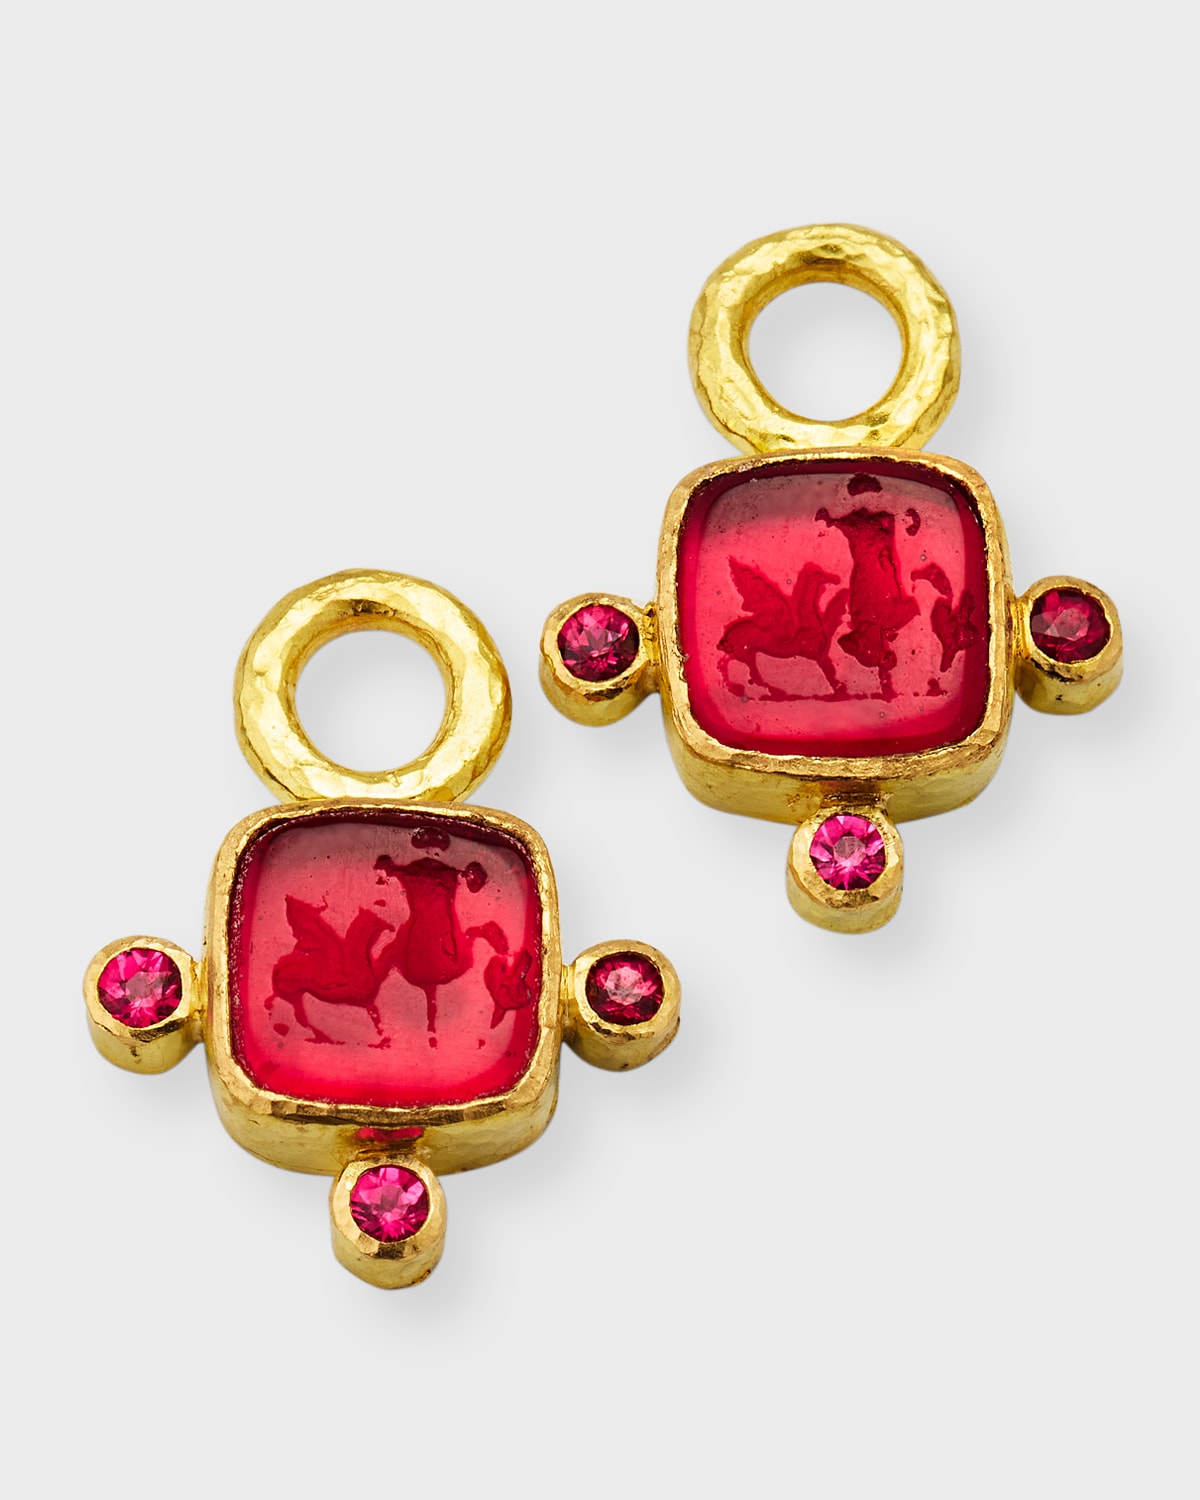 19K Venetian Glass Intaglio Earring Pendants with Stones